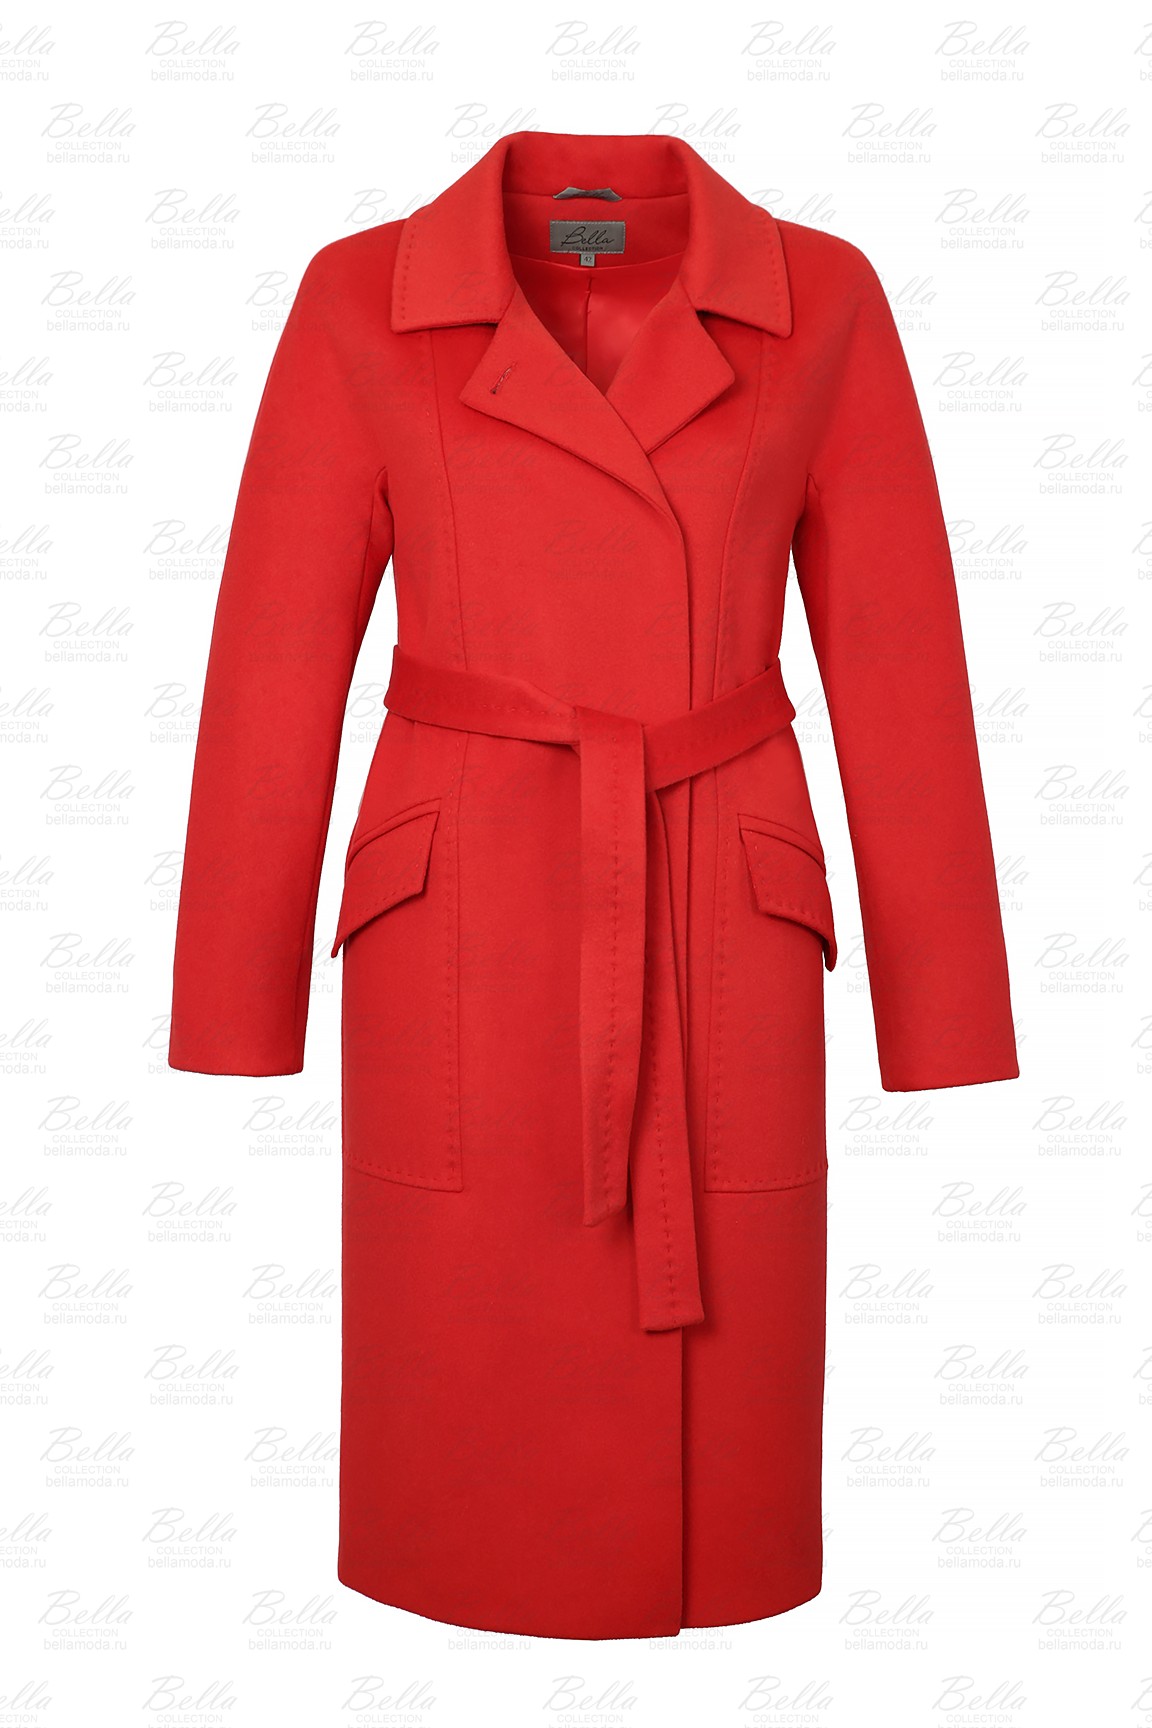 Bella collection пальто. Bella collection красное пальто.